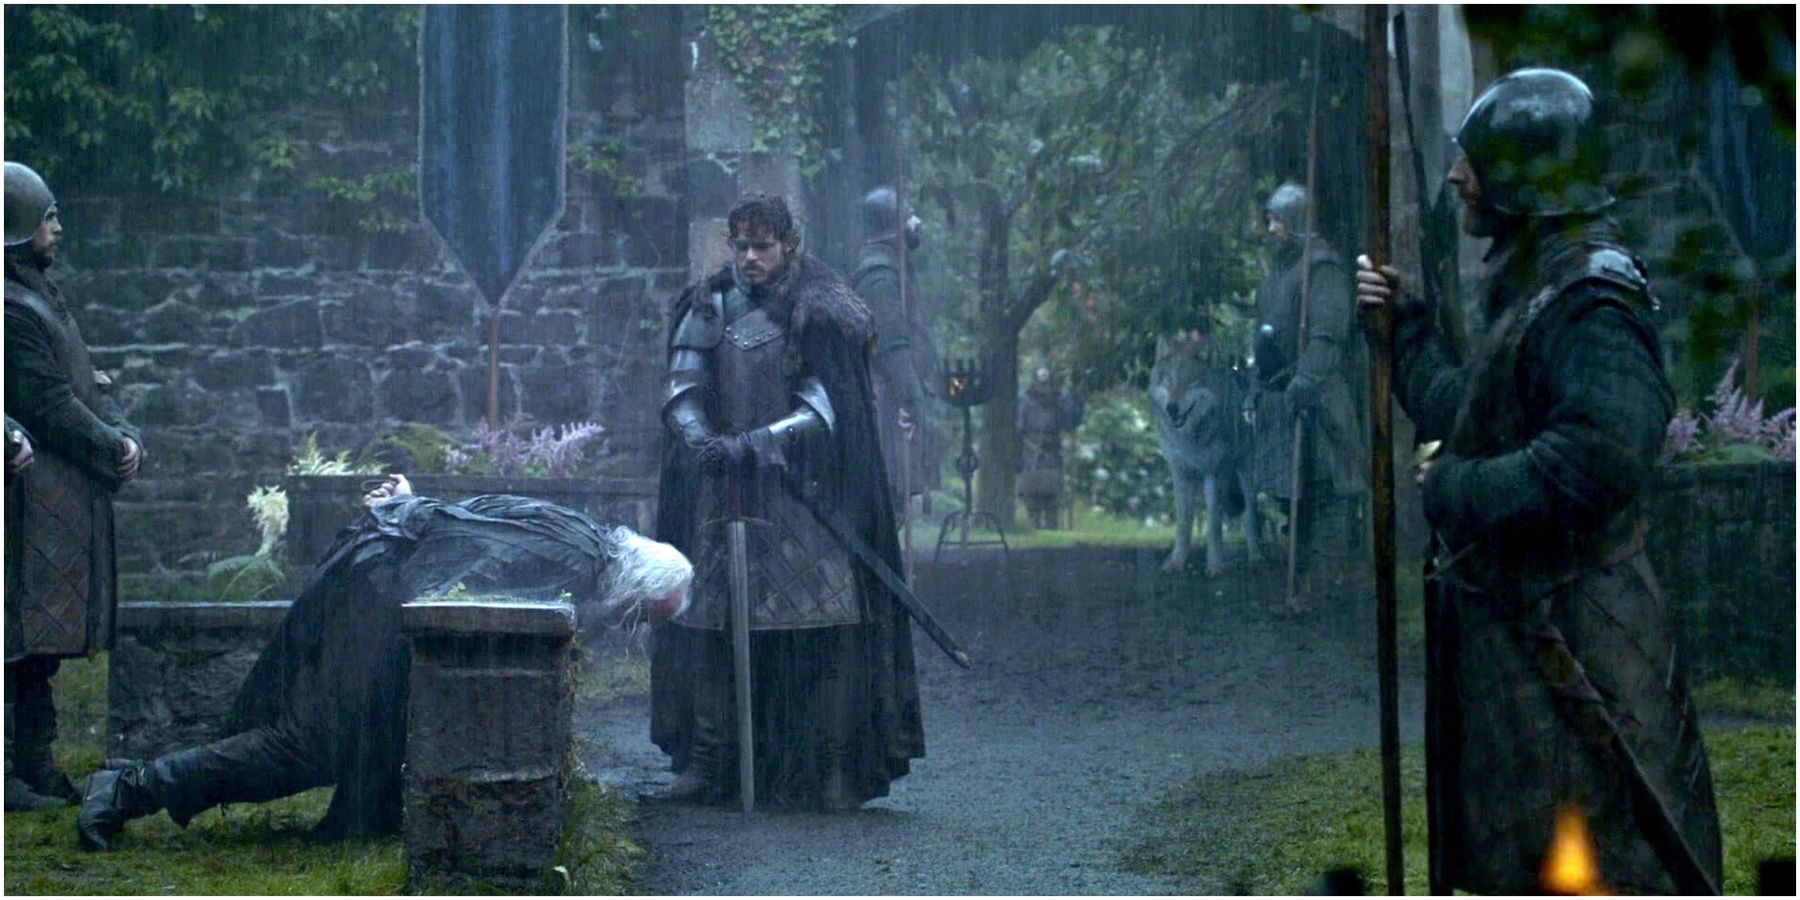 Robb Stark about to behead Rickard Karstark in Game of Thrones.